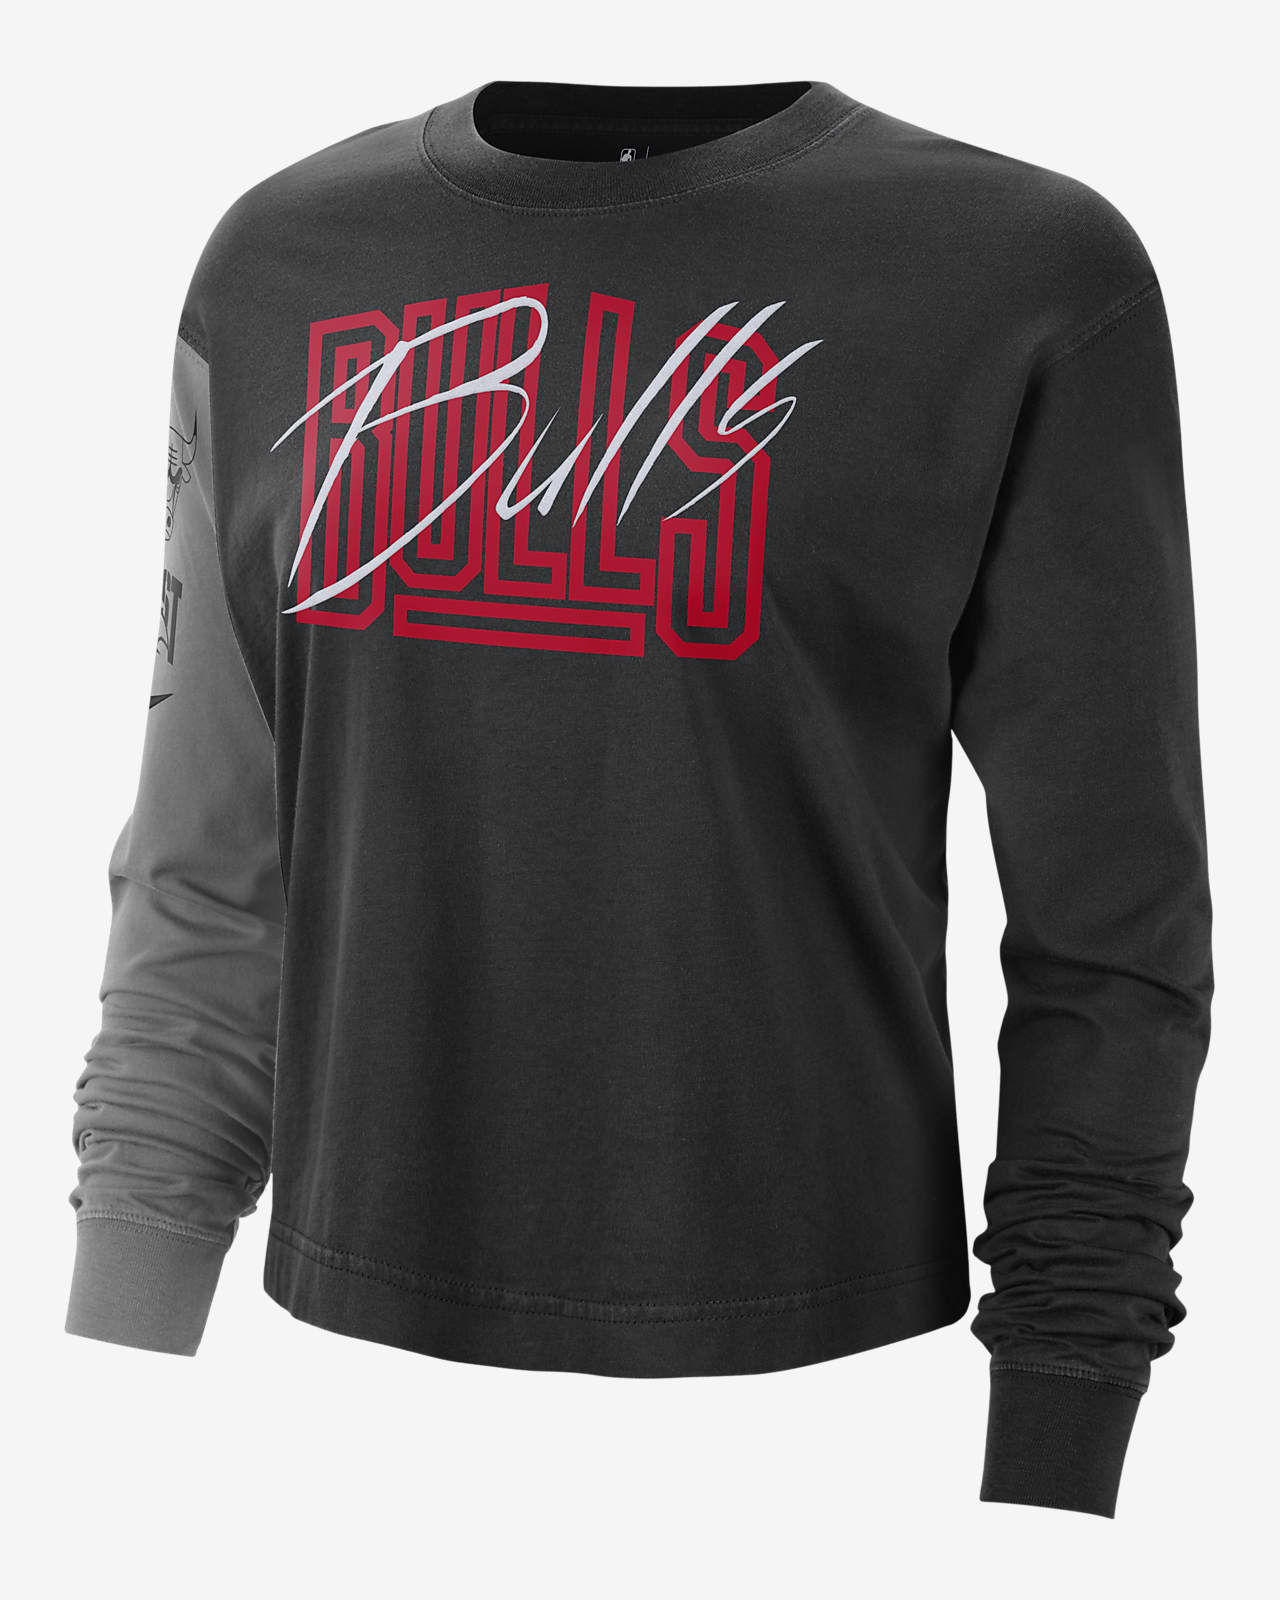 Nike Chicago Bulls NBA *Jordan* Shirt XL XL